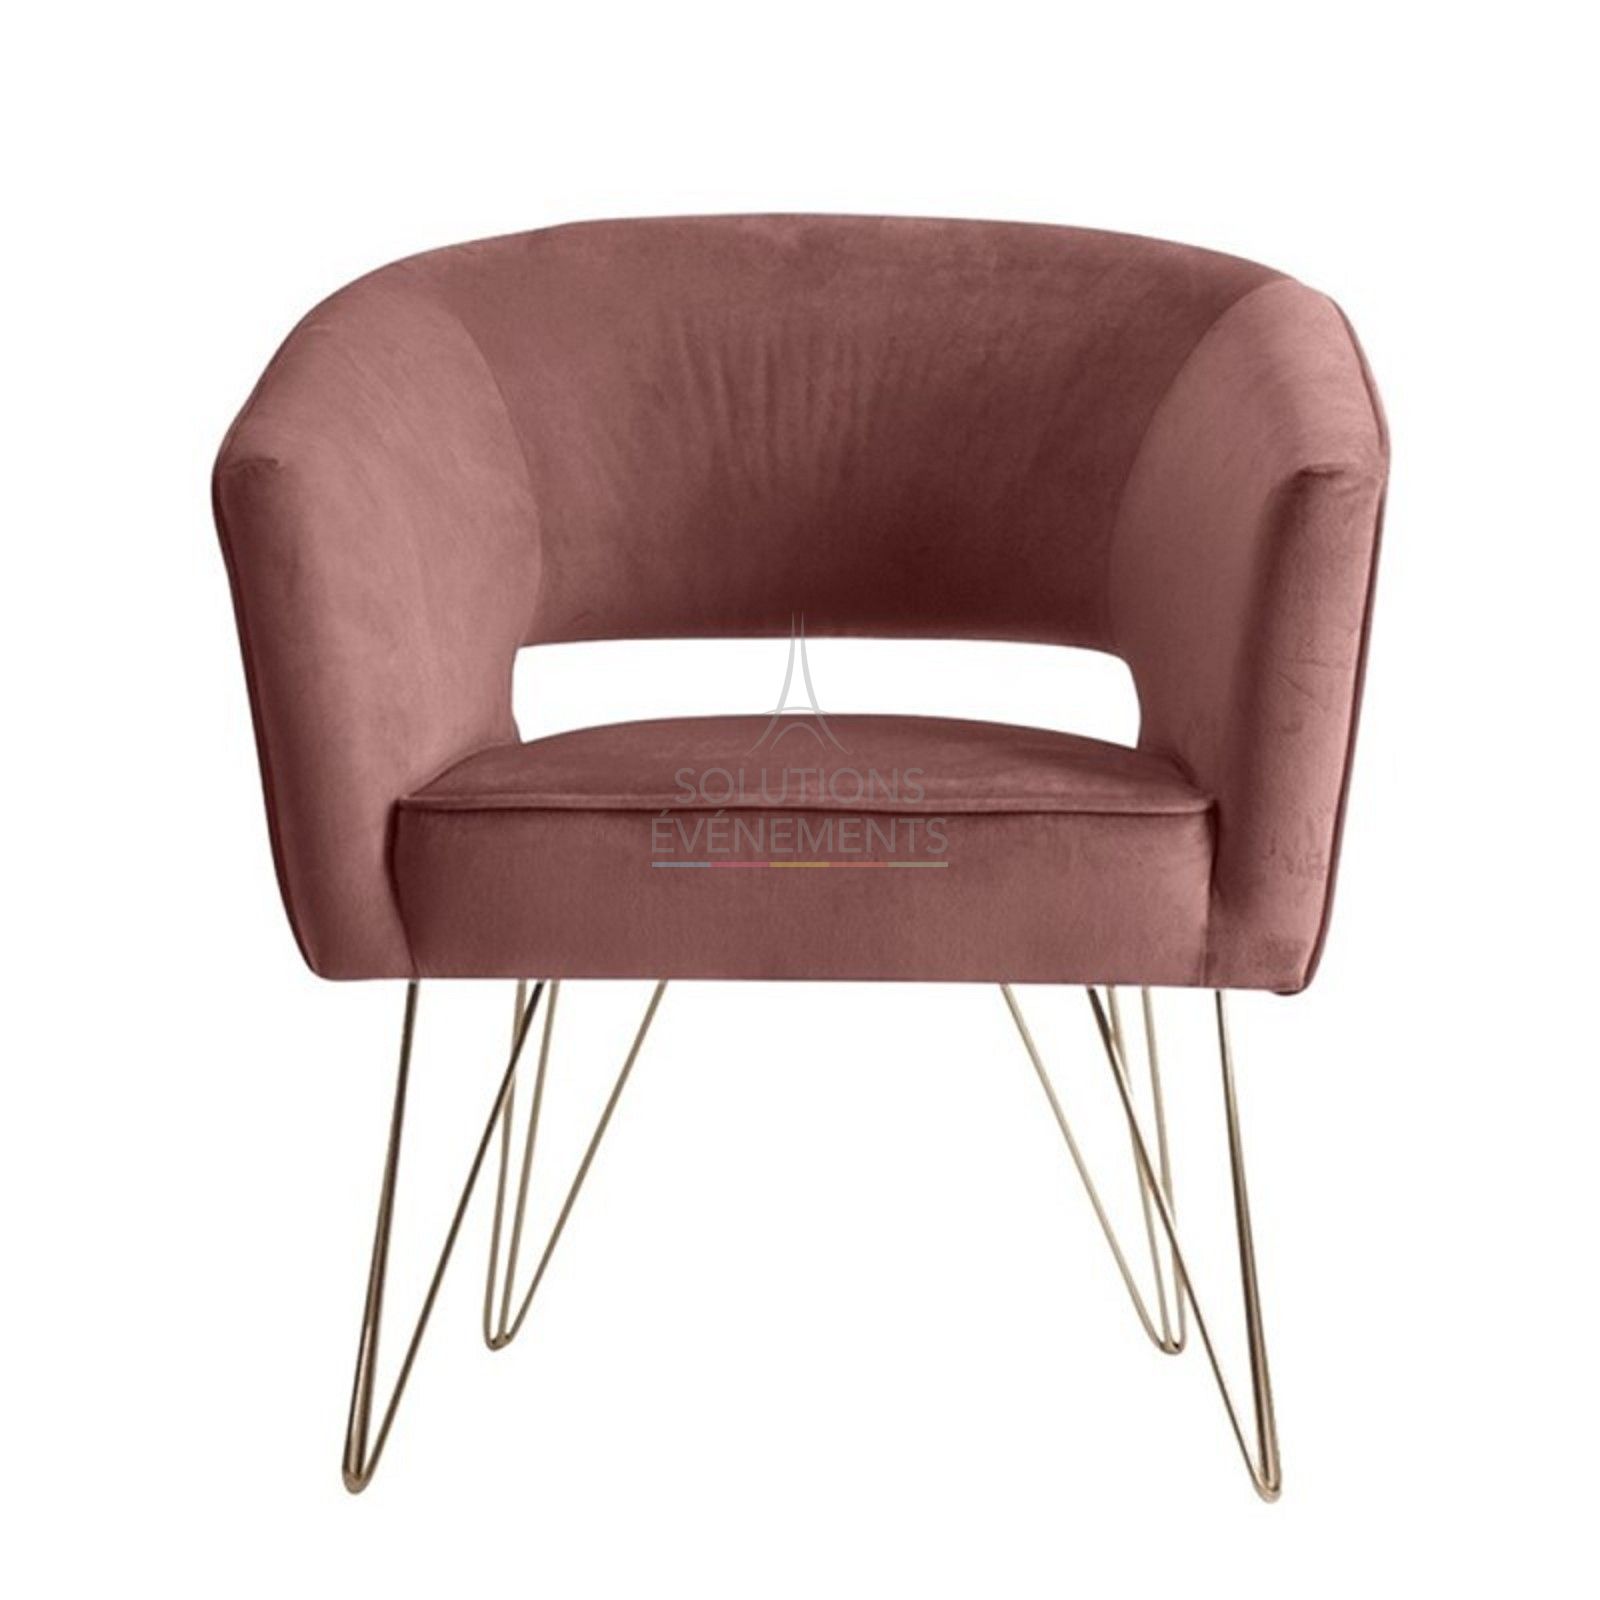 Rental pink velvet armchair with gold legs